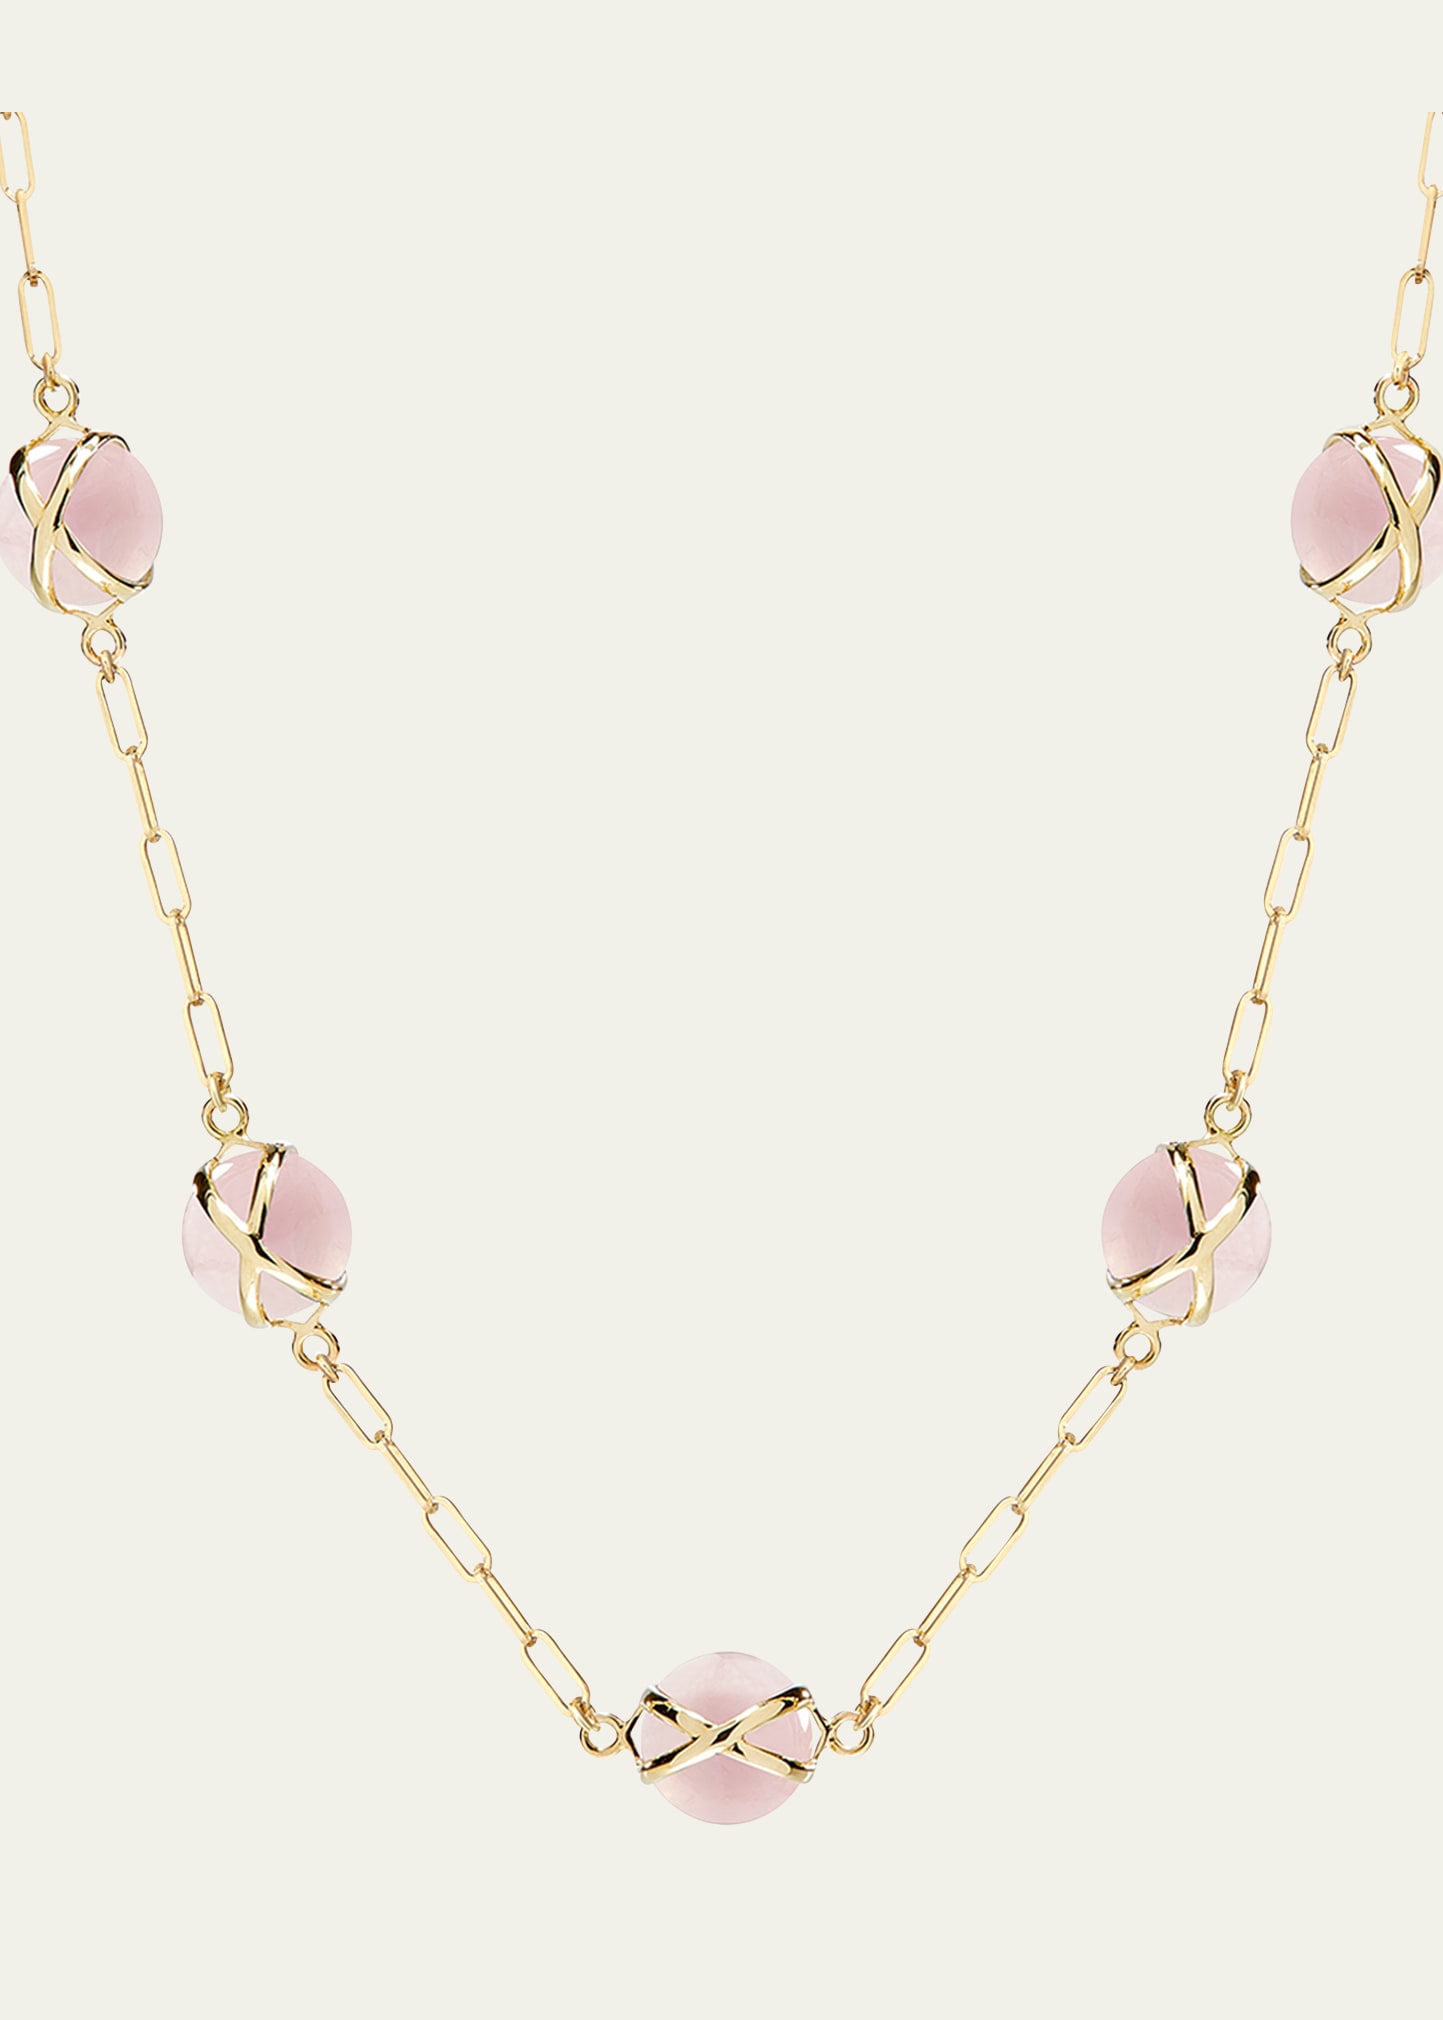 Prisma 18k Gold Paperclip Chain Necklace with Rose Quartz